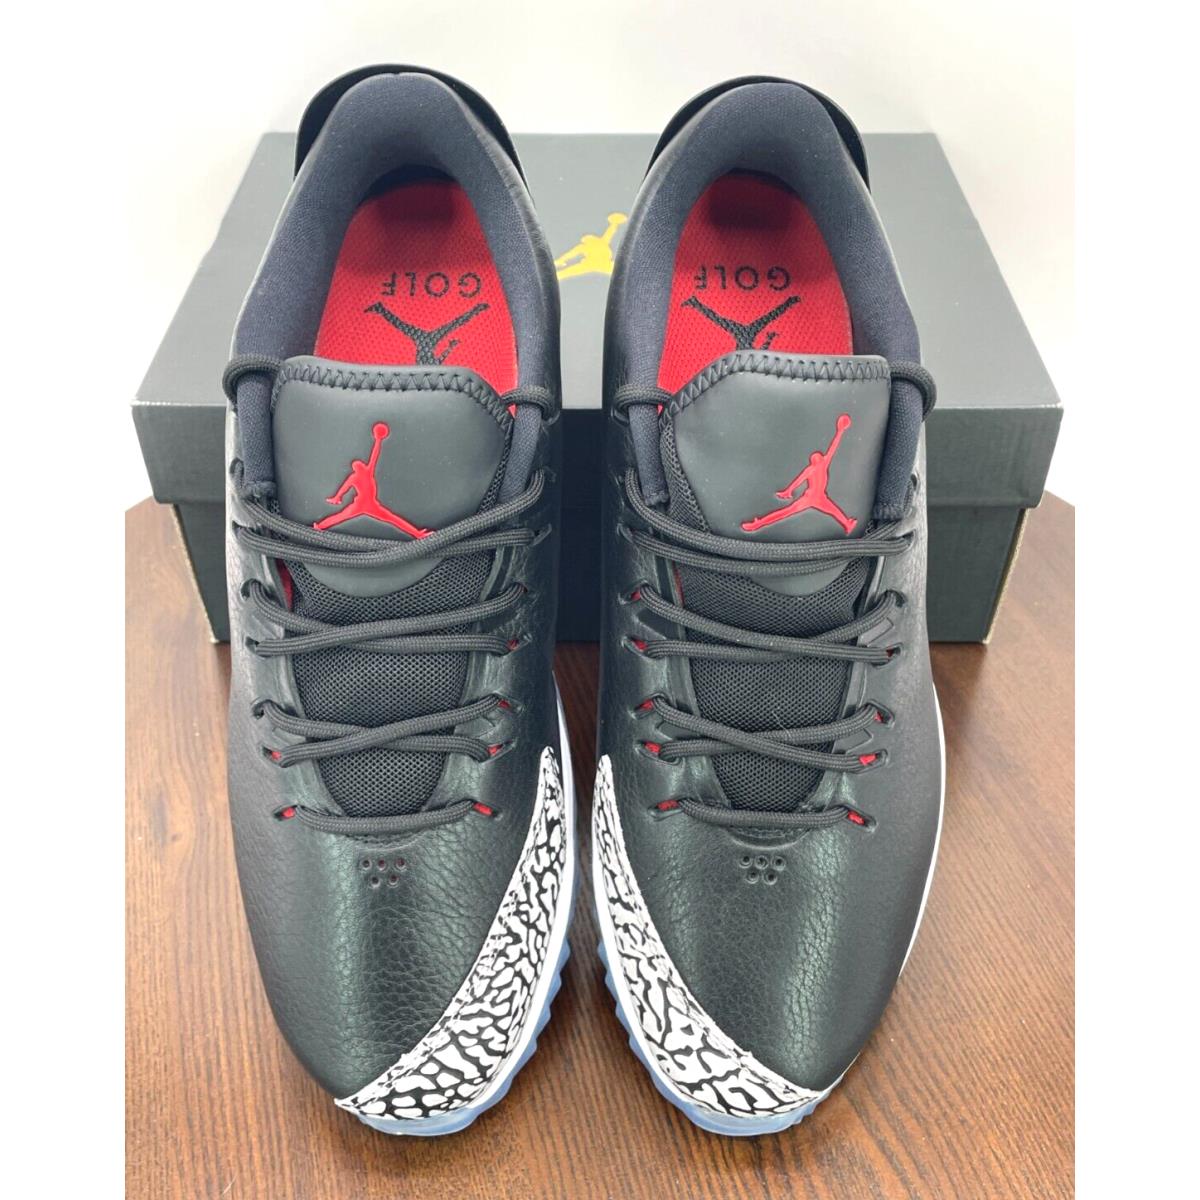 Nike Jordan Adg Black Cement Fire Red Golf Shoes Men s Sz 10.5 / W